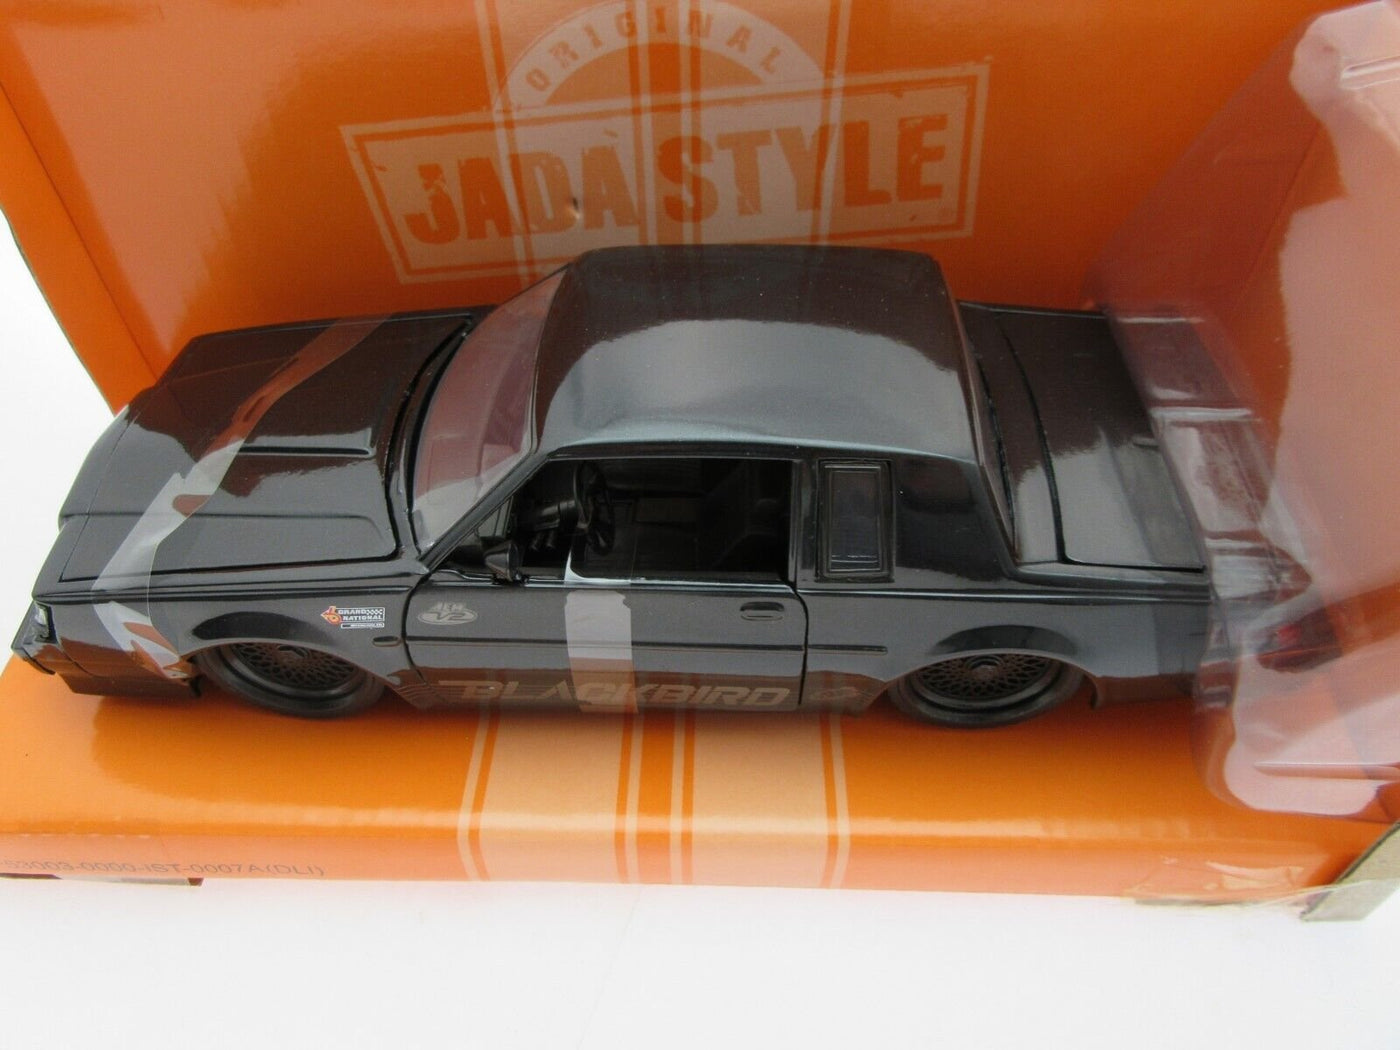 1987 Buick Grand National  Blackbird ~ Die Cast Car ~ Big Muscle ~ Black ~ 1:24